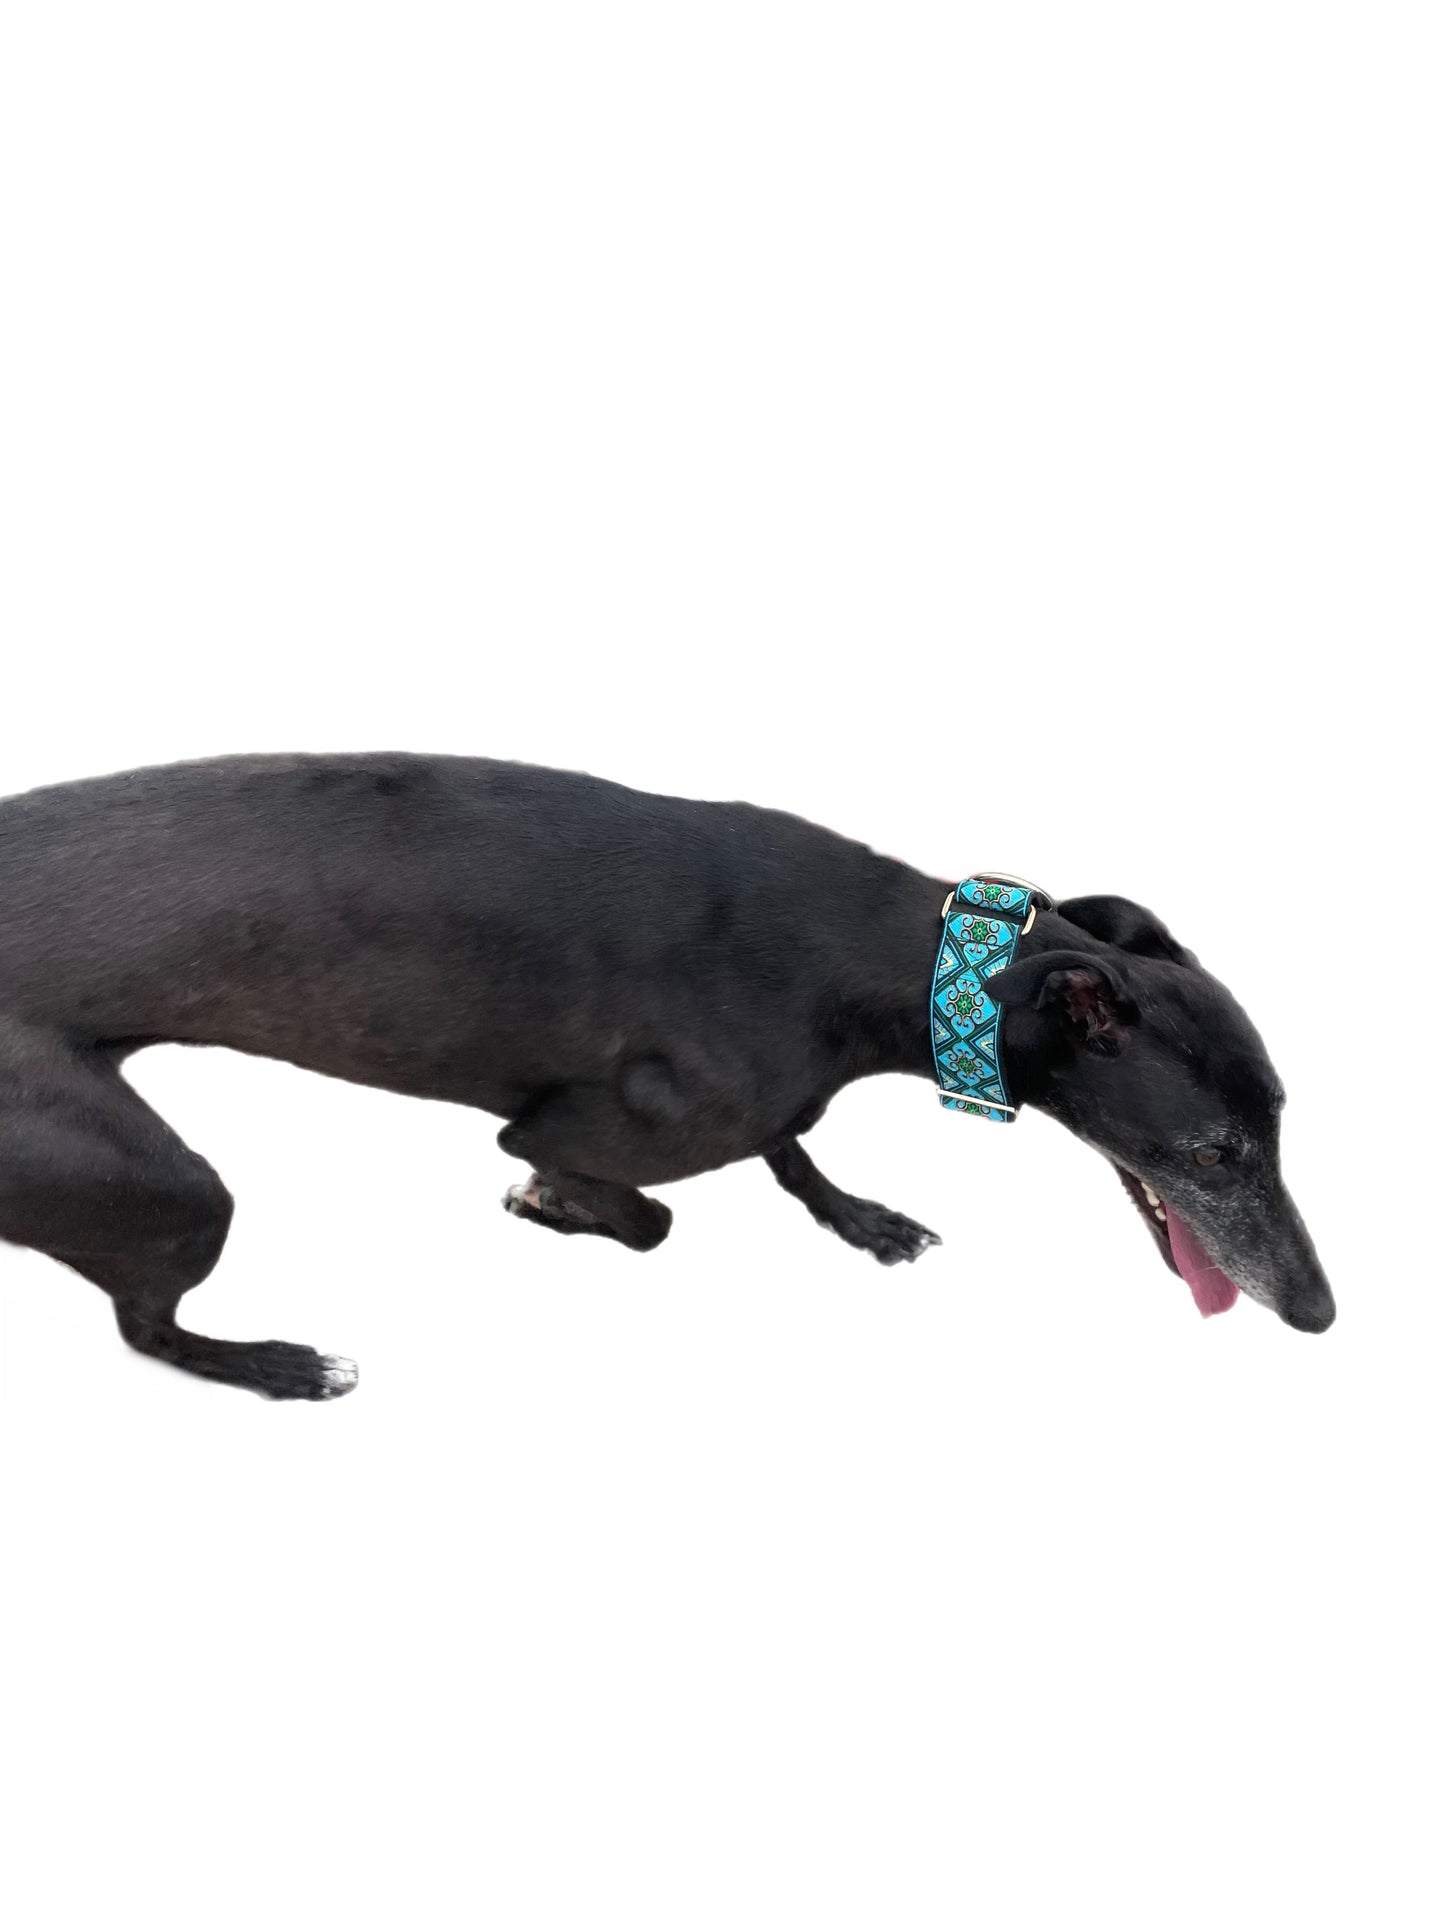 Aqua shimmer Greyhound martingale collar on black cotton webbing